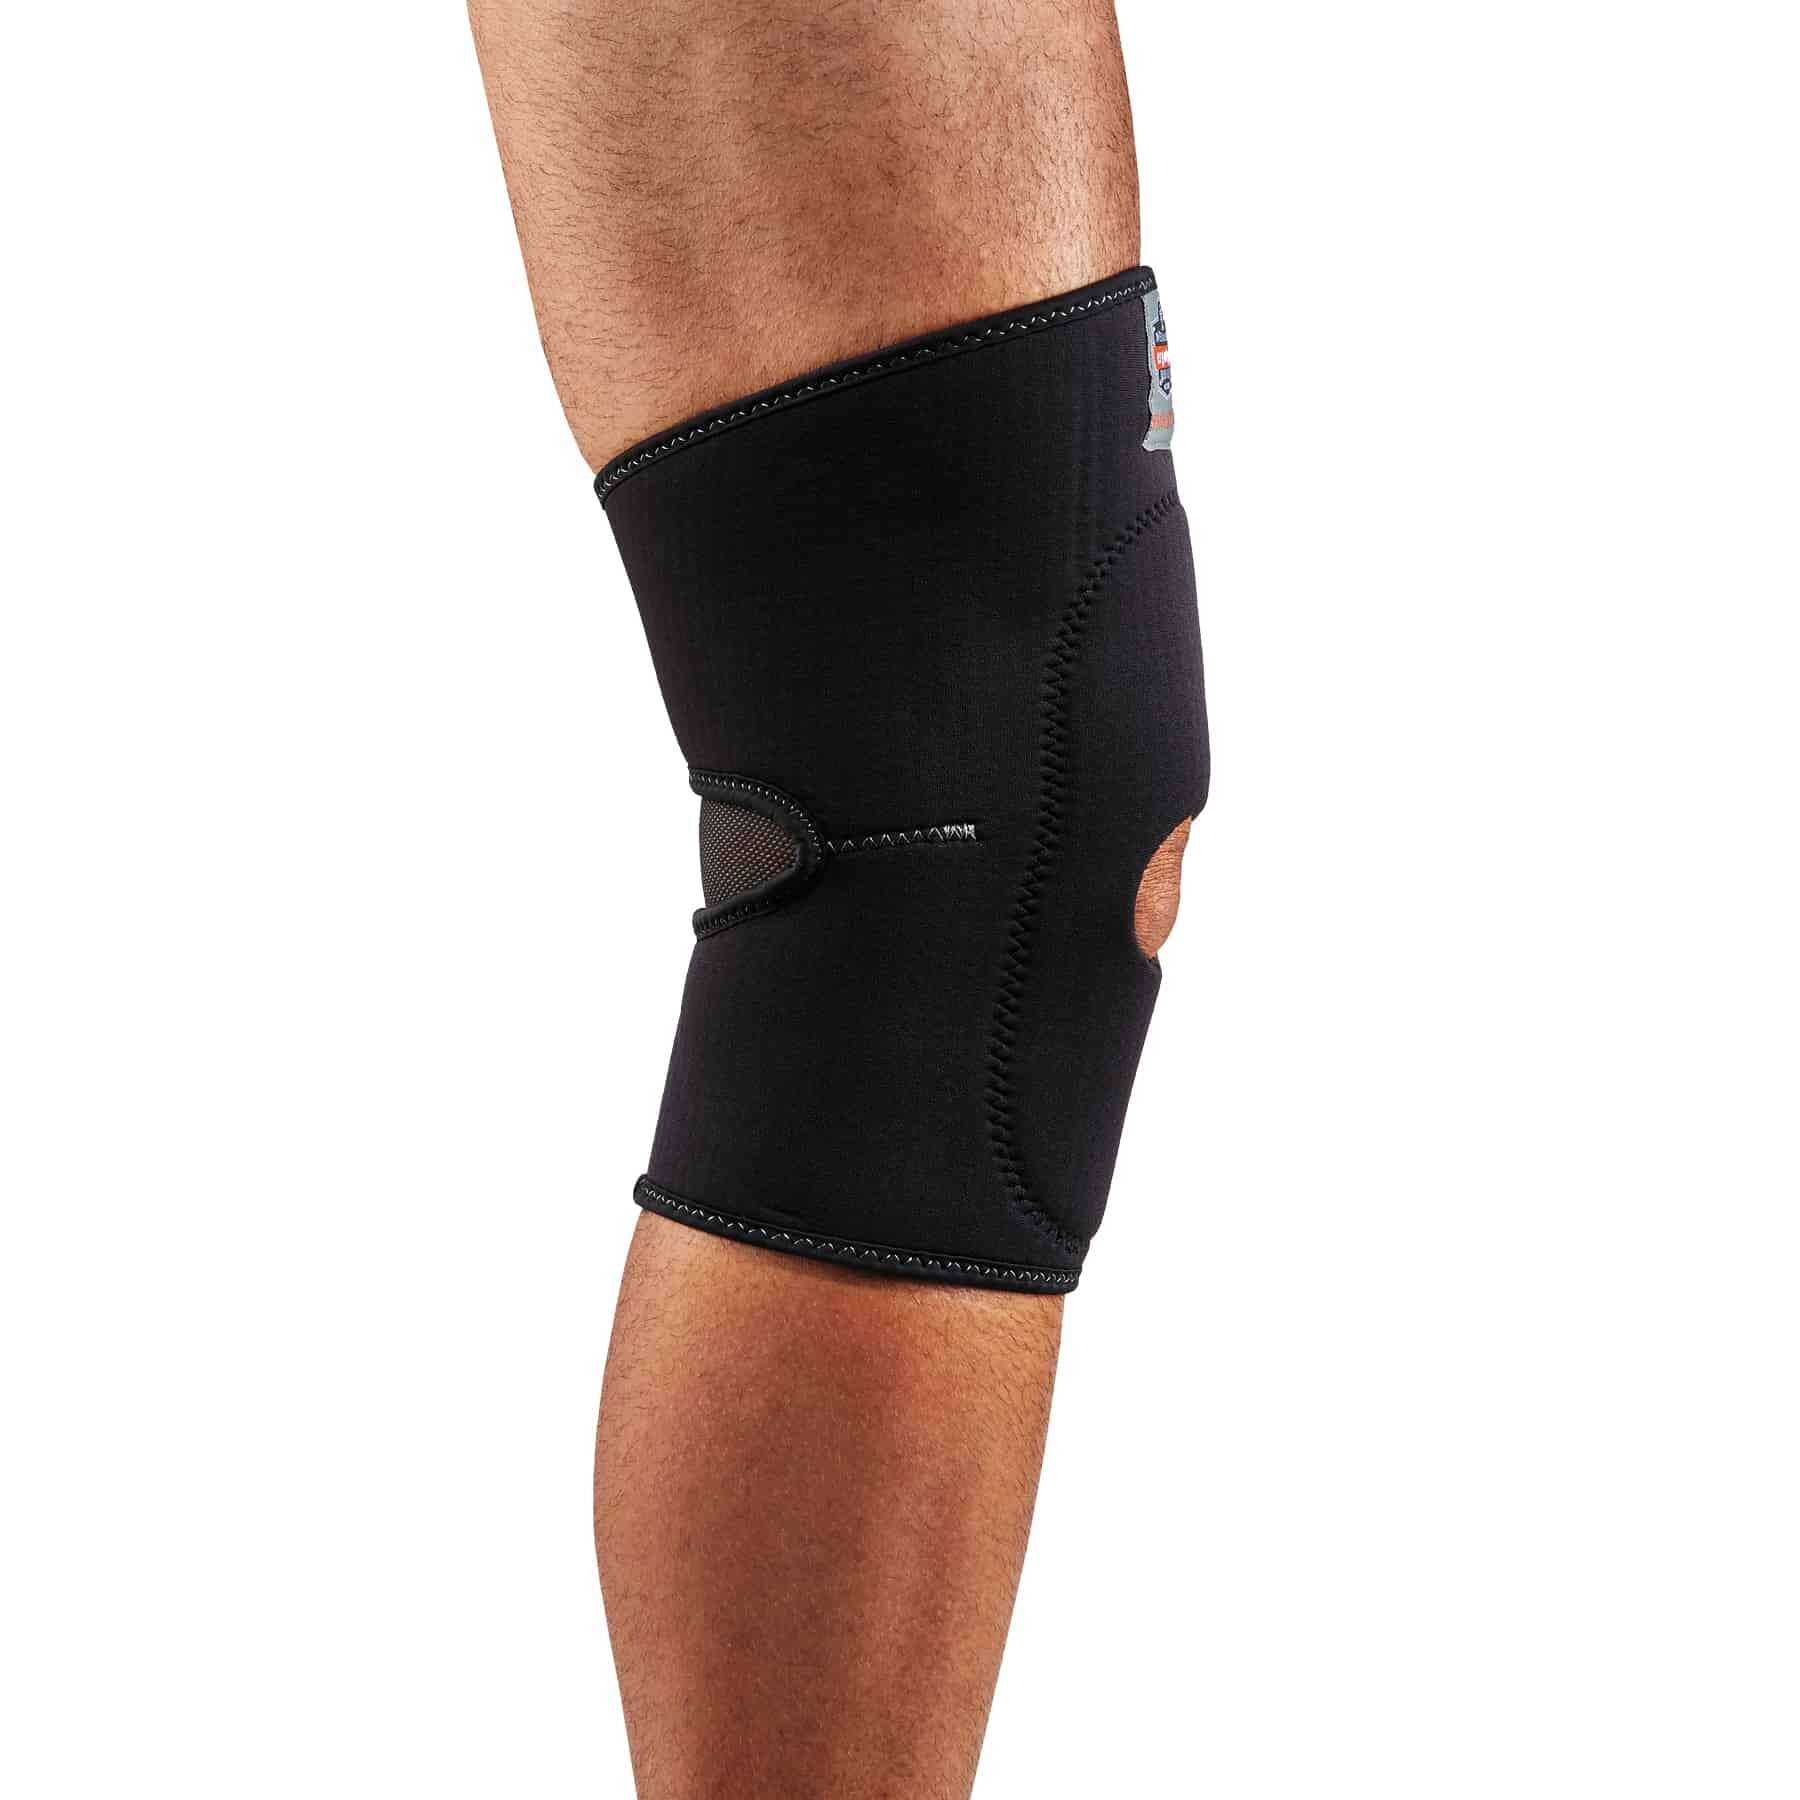 Neoprene Knee Brace (Patellar Support)